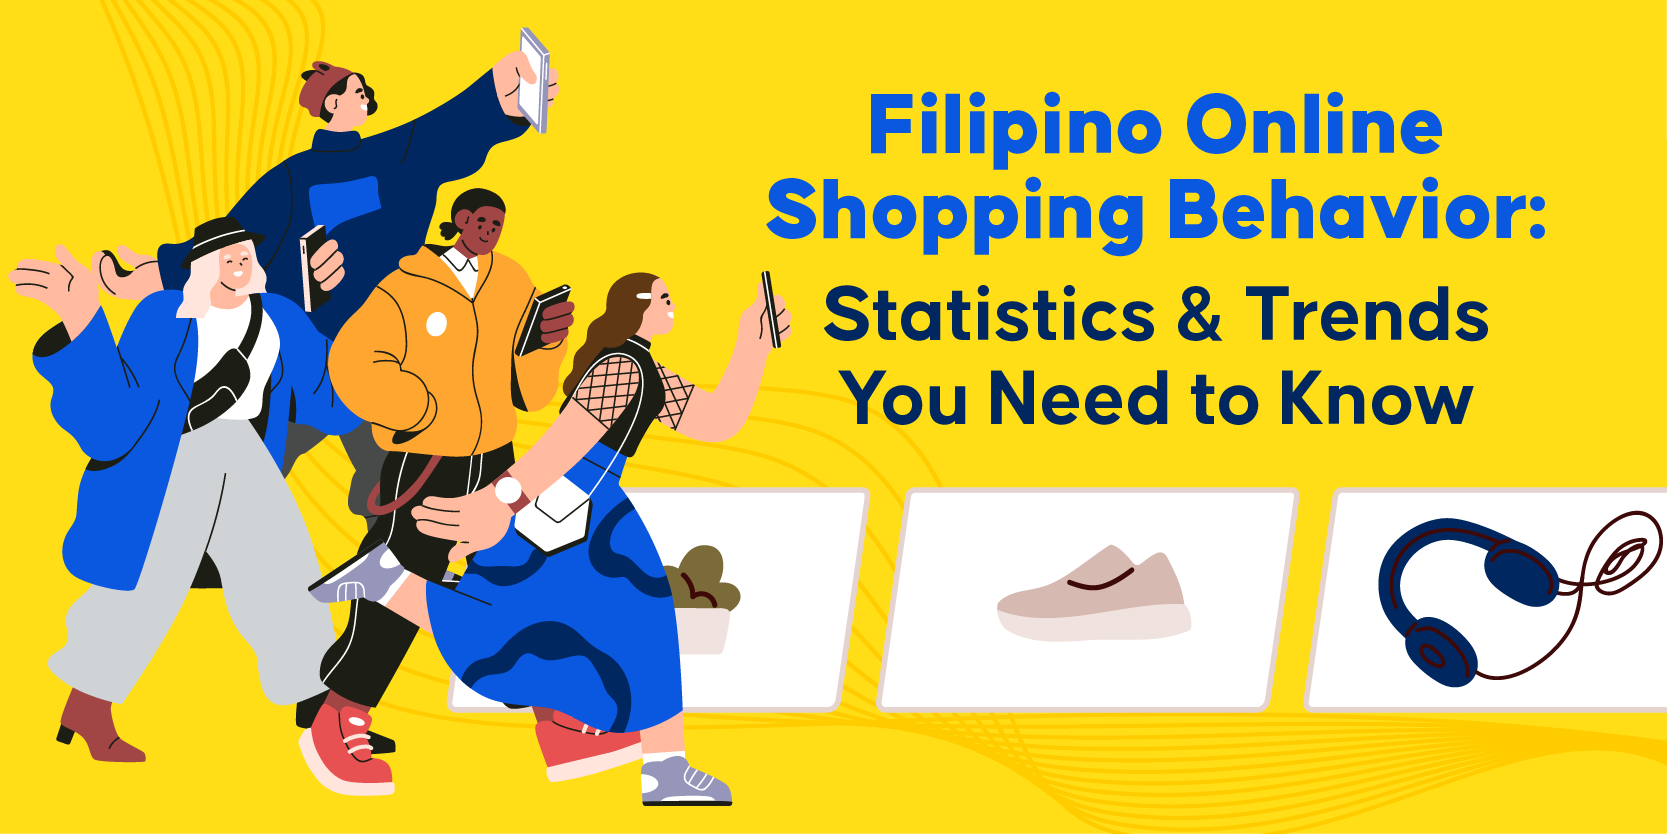 Filipino Online Shopping Behavior: Statistics & Trends